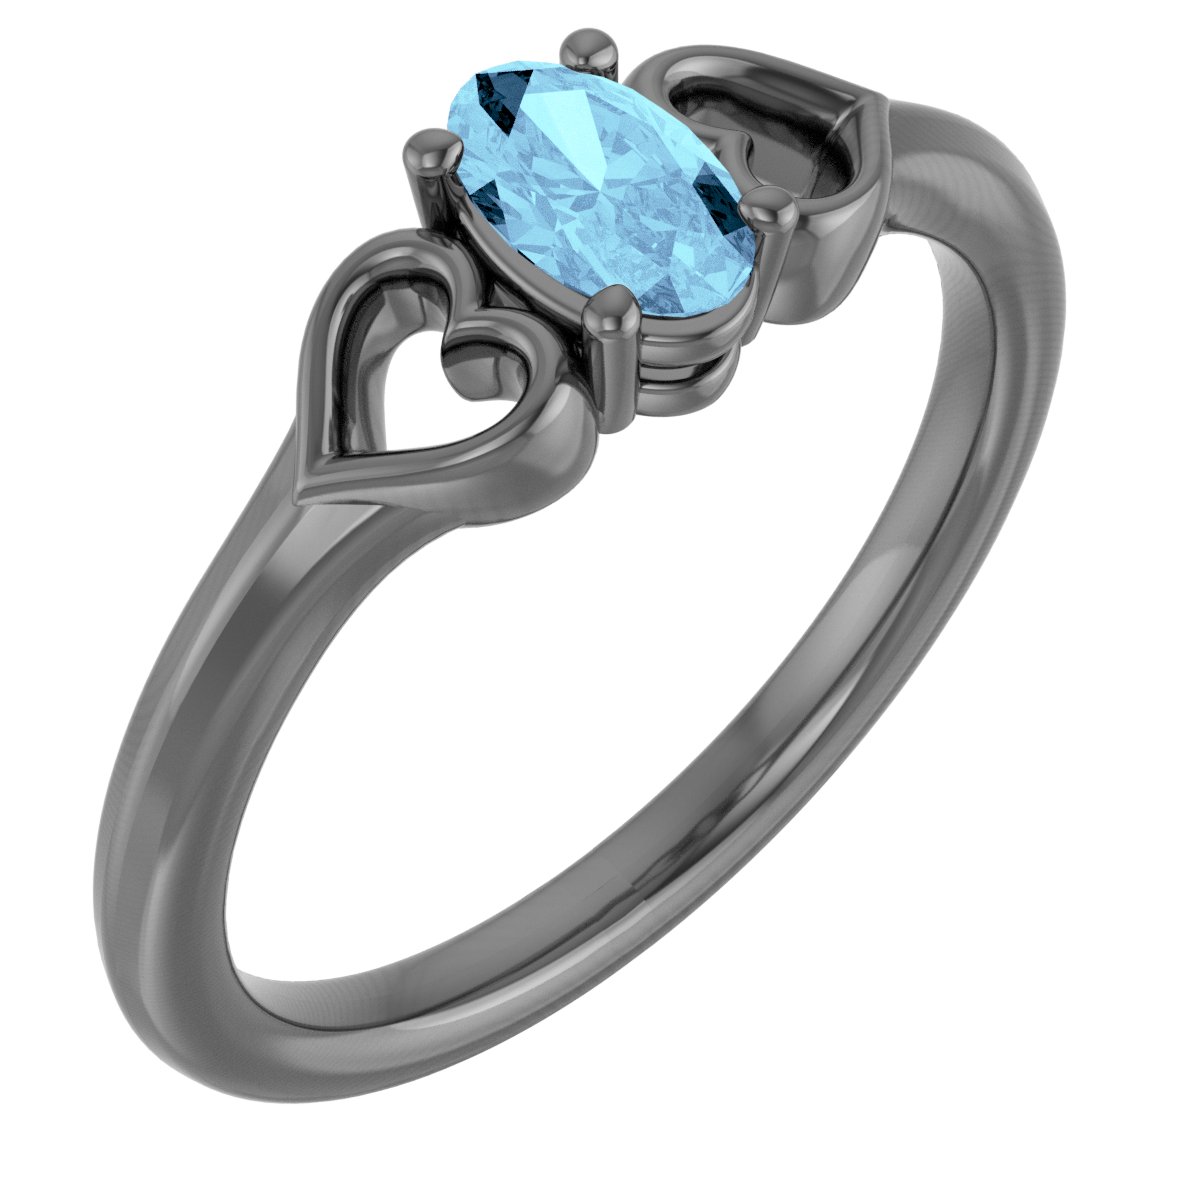 Sterling Silver Imitation Aquamarine Youth Heart Ring